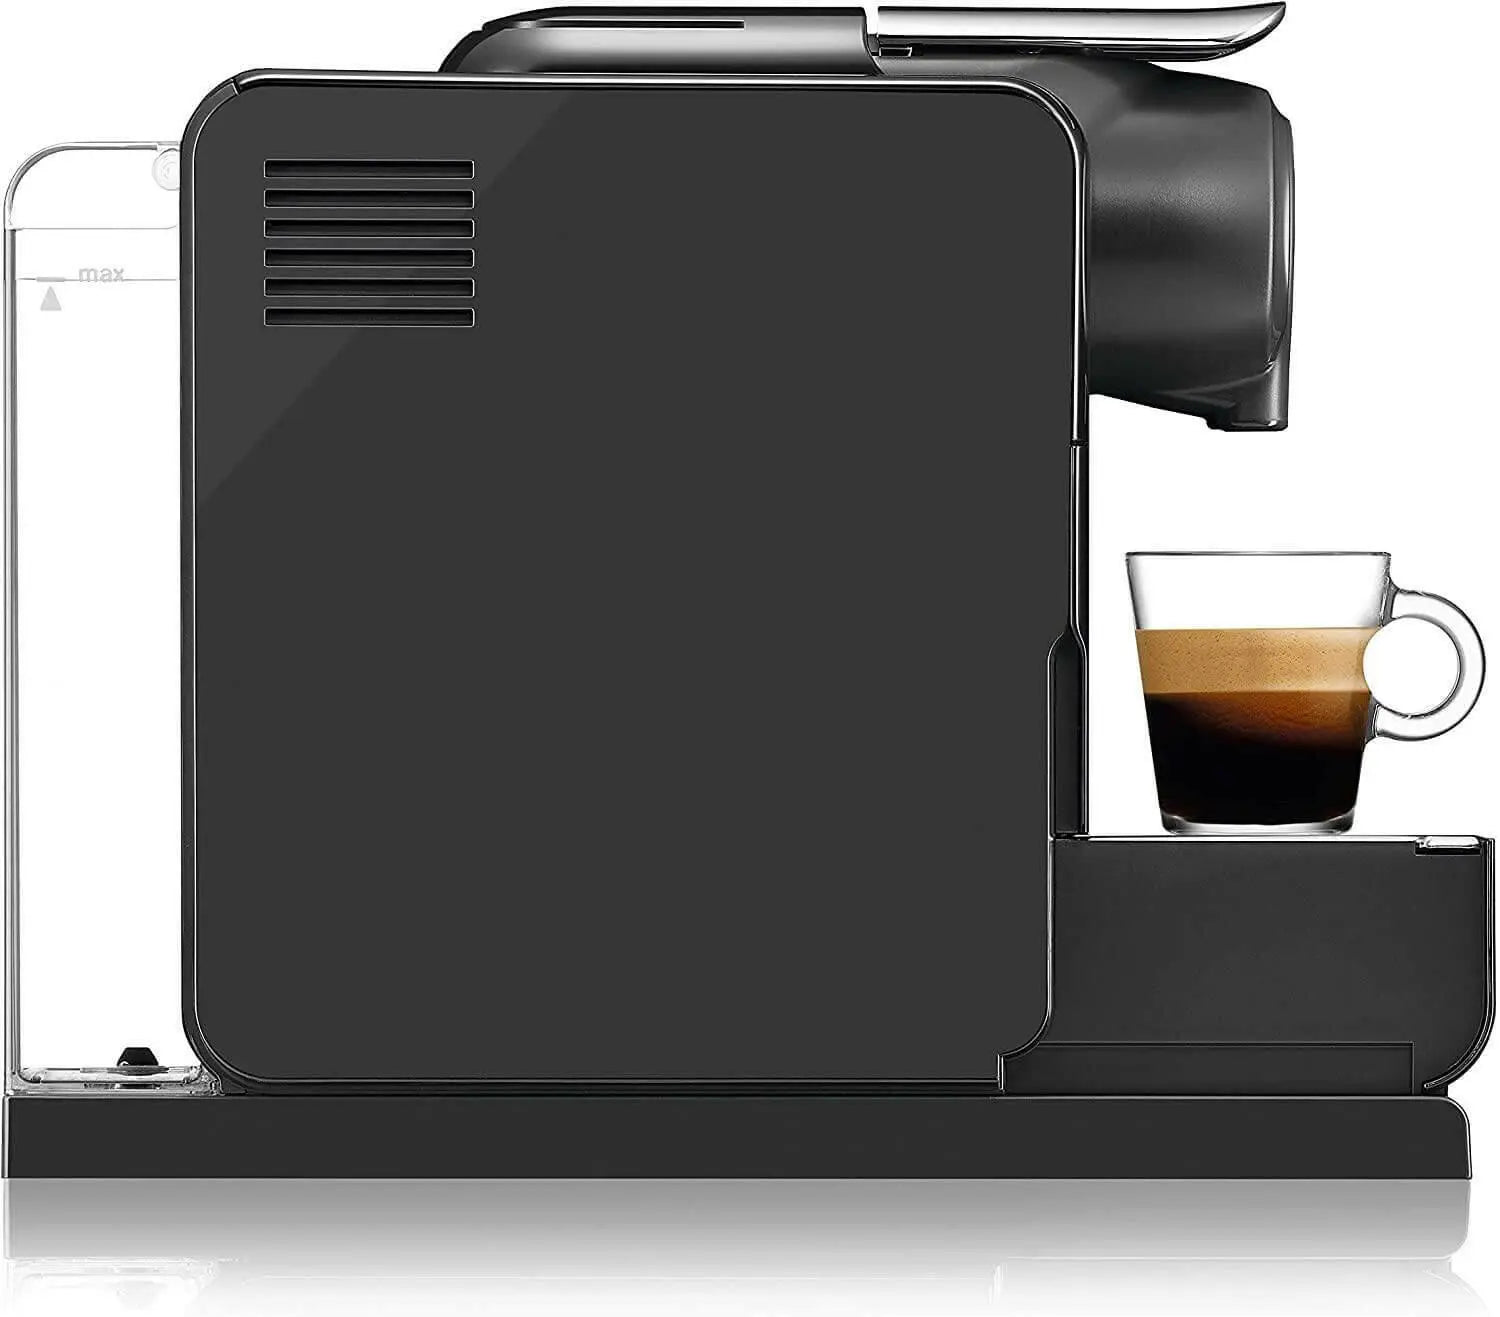 Nespresso Lattissima Touch Espresso Machine with Milk Frother